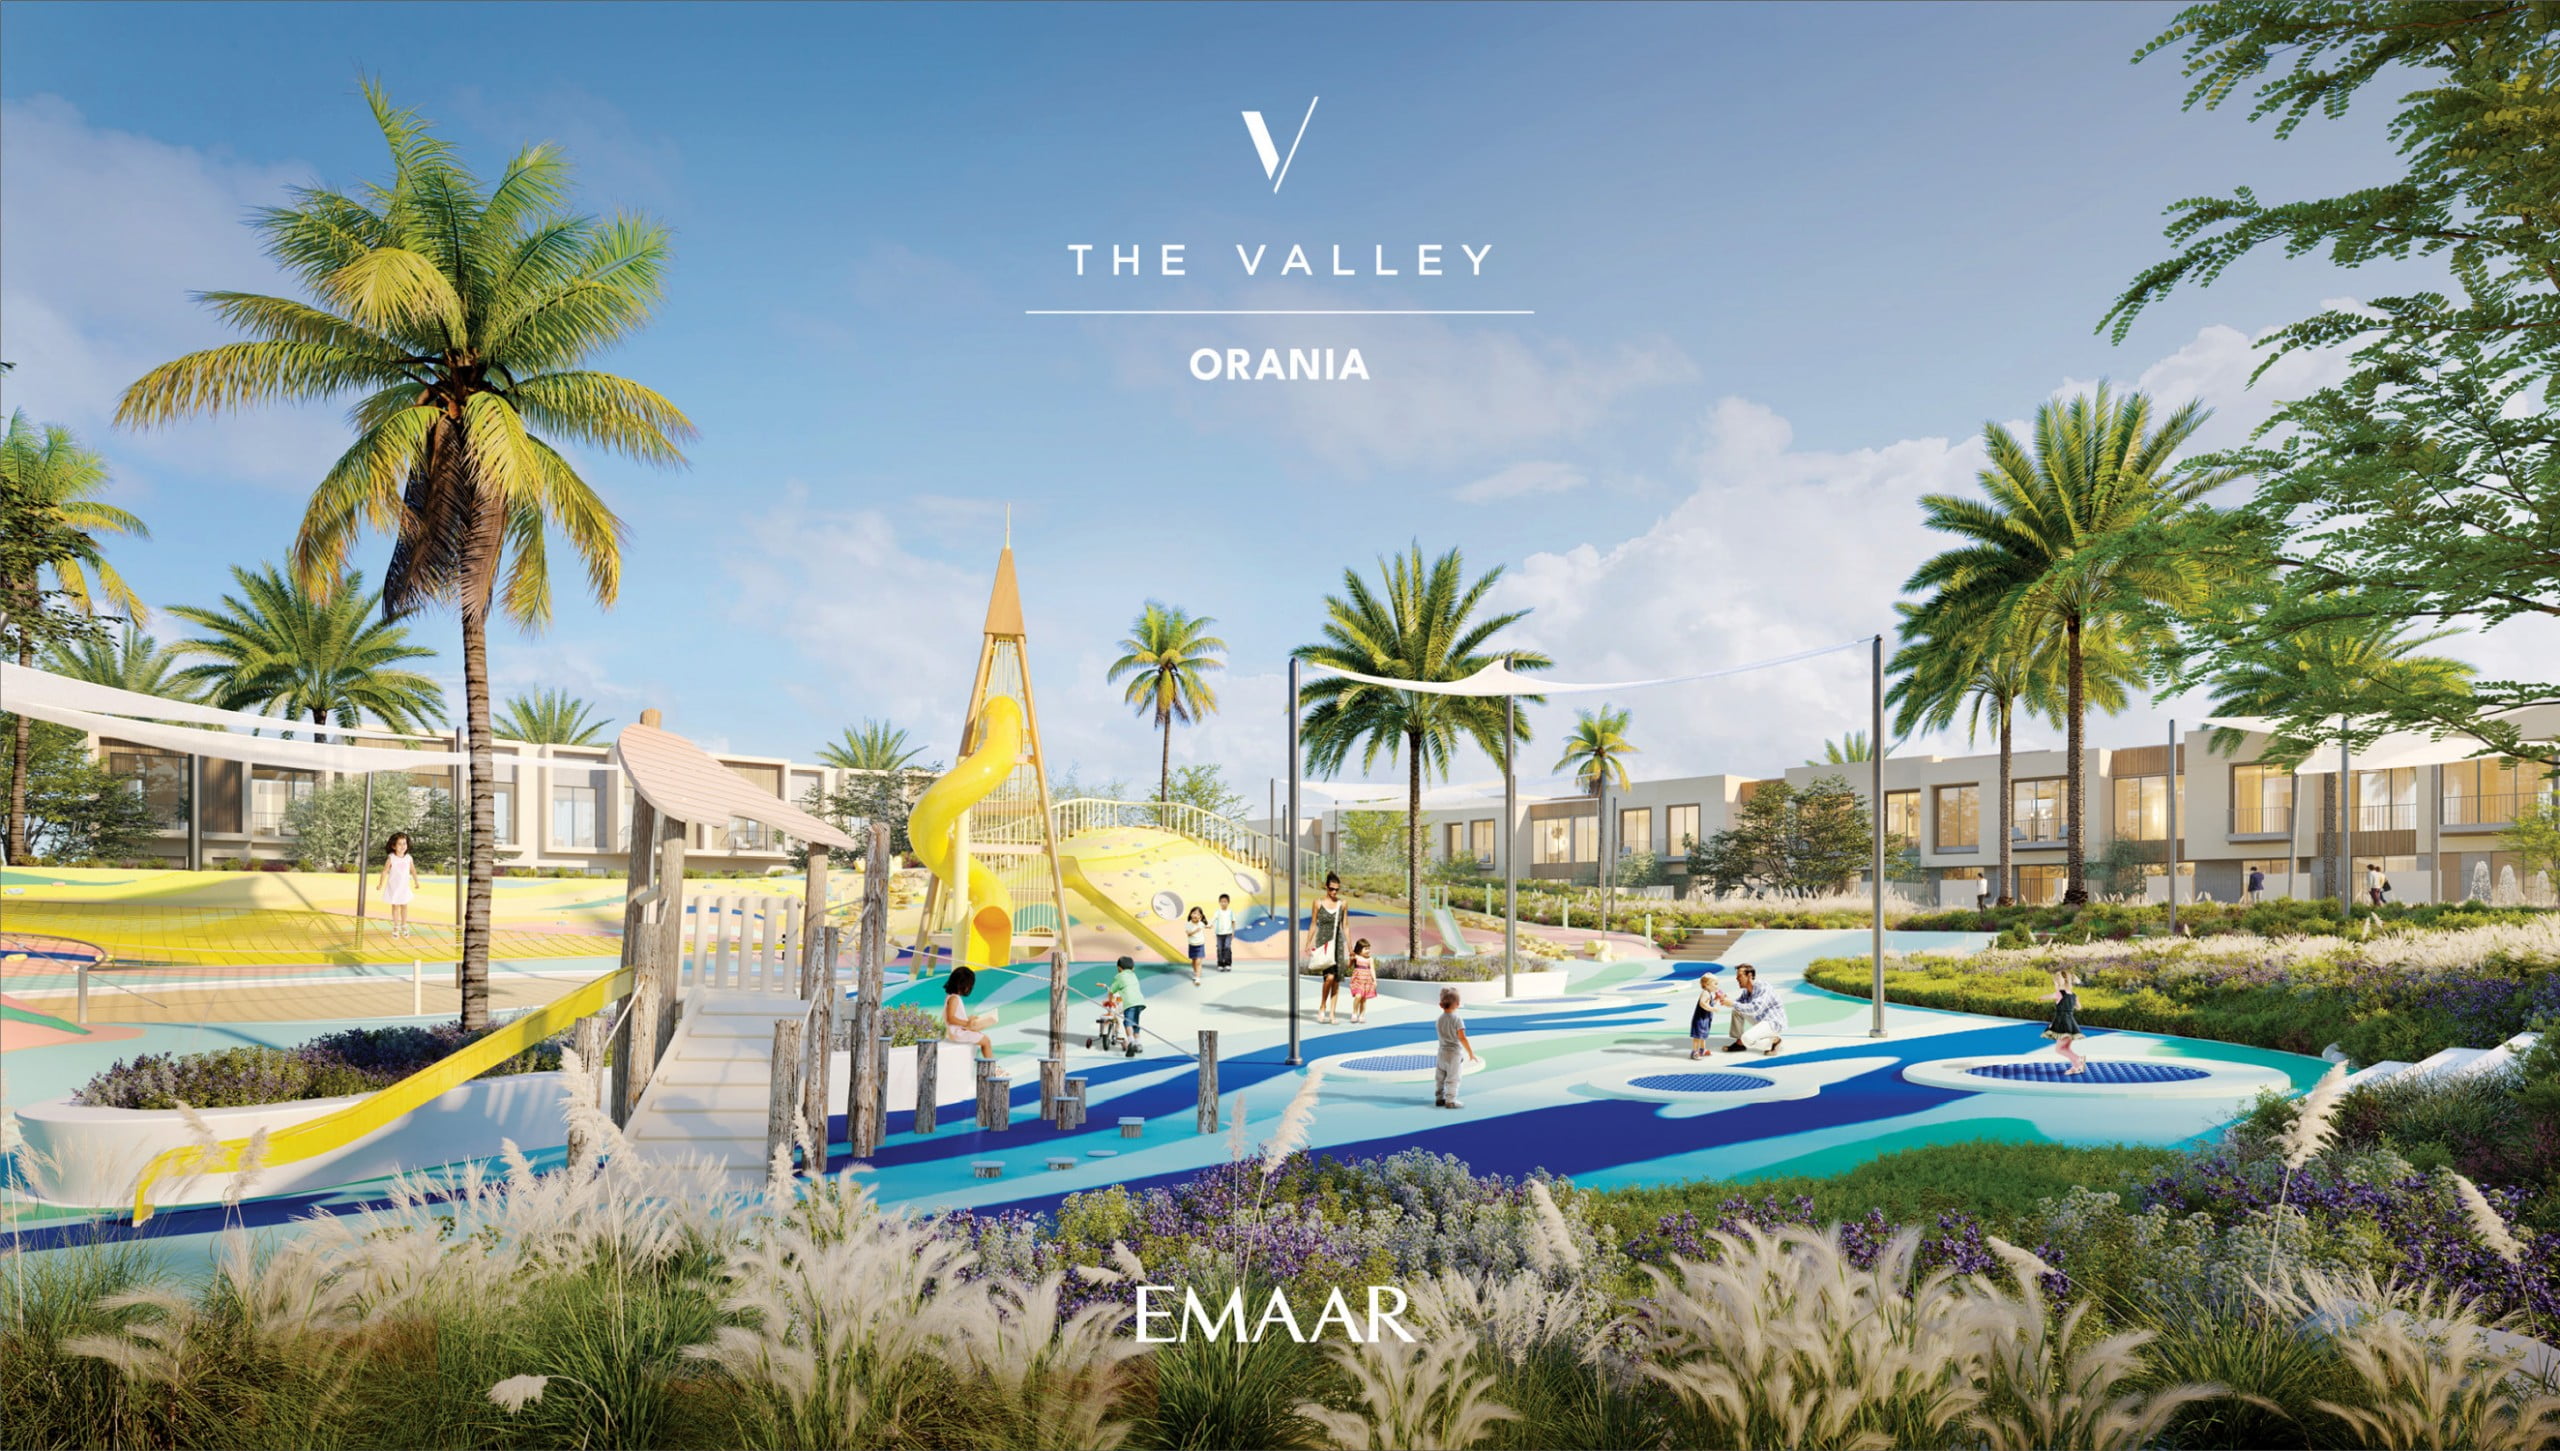 ORANIA THE VALLEY EMAAR 10 scaled - Immobilier Dubai